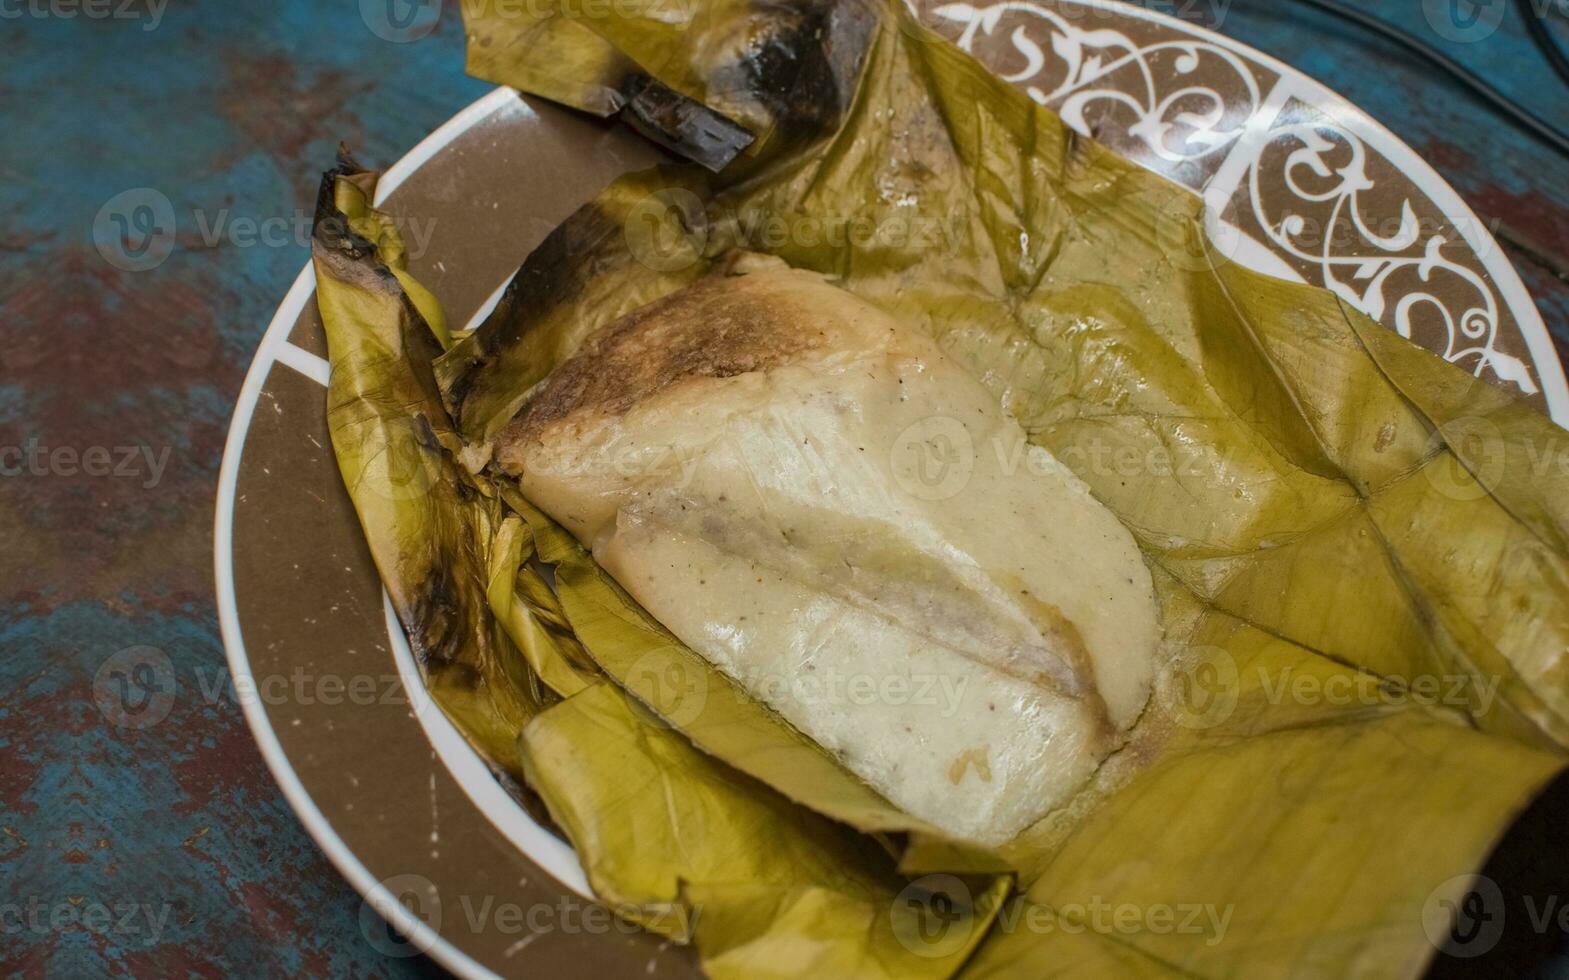 Stuffed tamale served on wooden table, stuffed tamale on banana leaf served on wooden table, typical nicaragua food photo